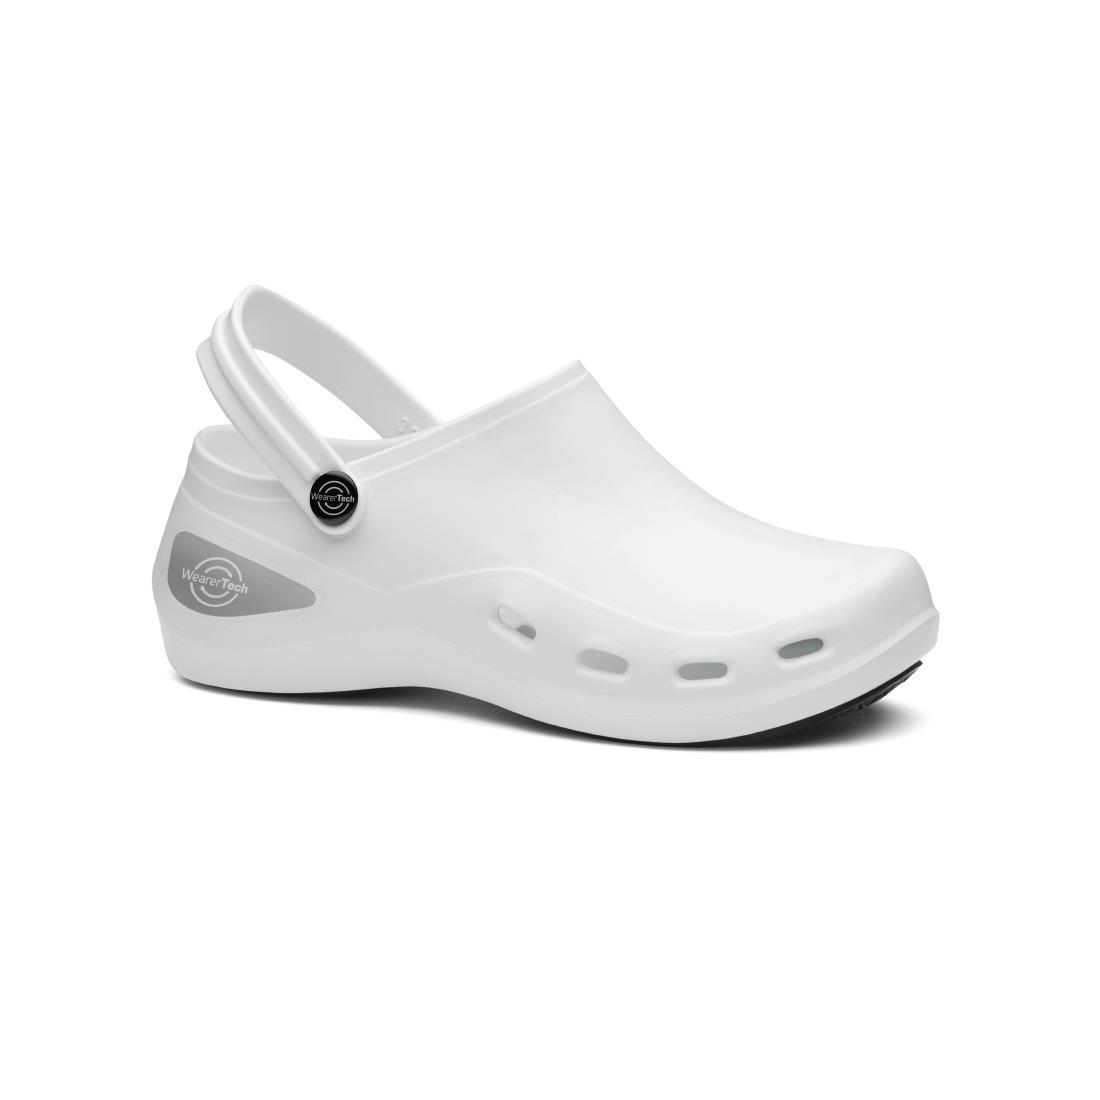 WearerTech Unisex Invigorate White Safety Shoe Size 8 - BB199-42  - 2